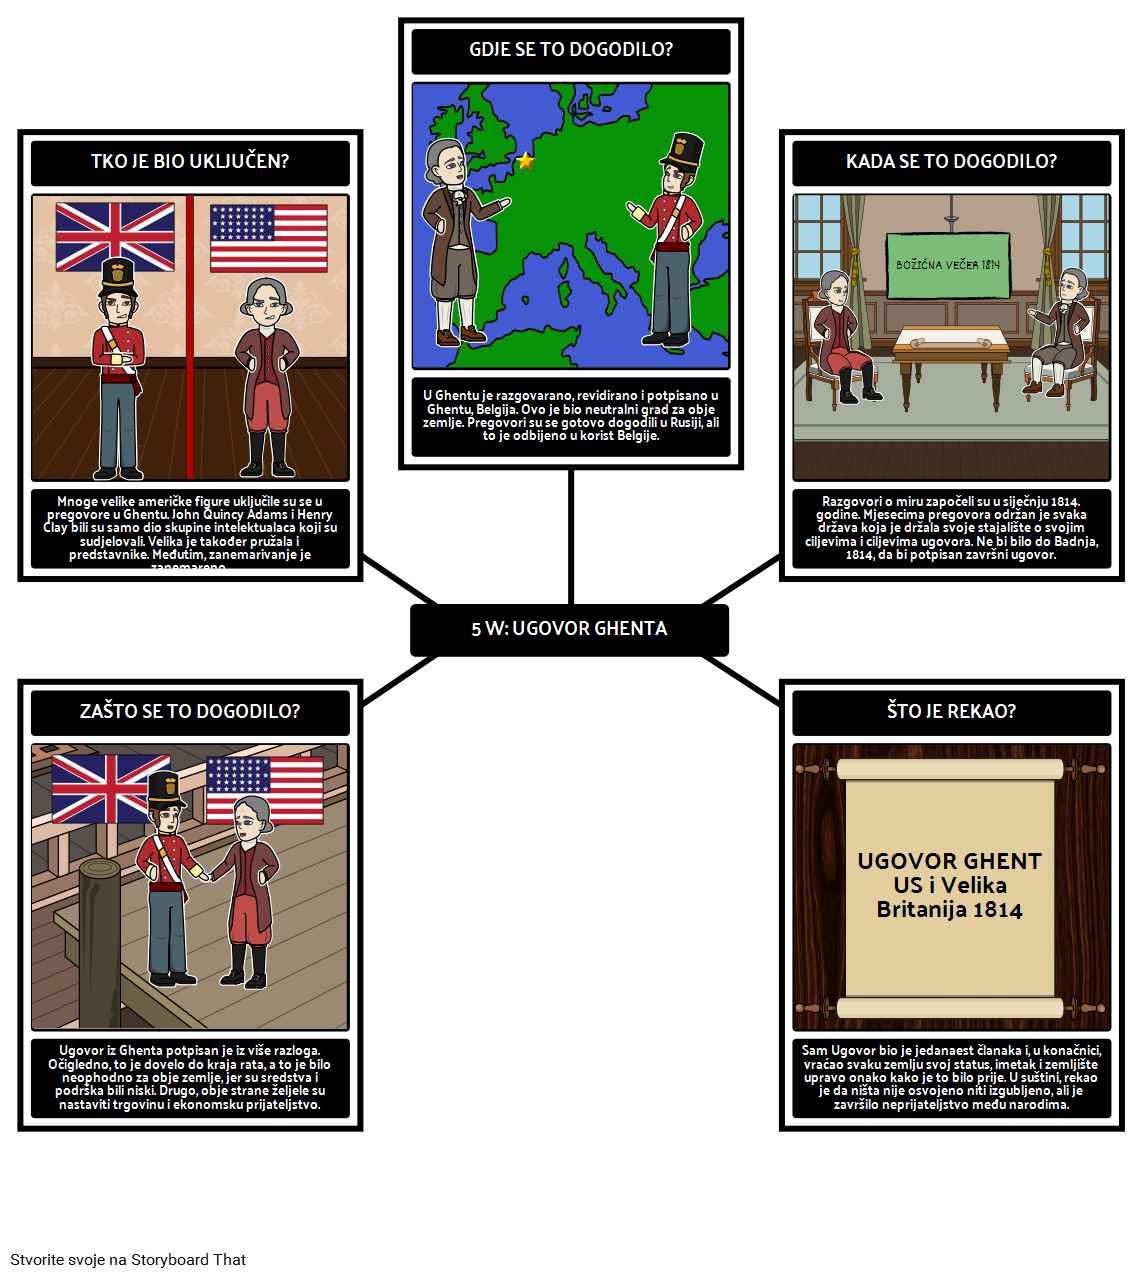 Rat iz 1812. - 5 Ws Ghentovog ugovora